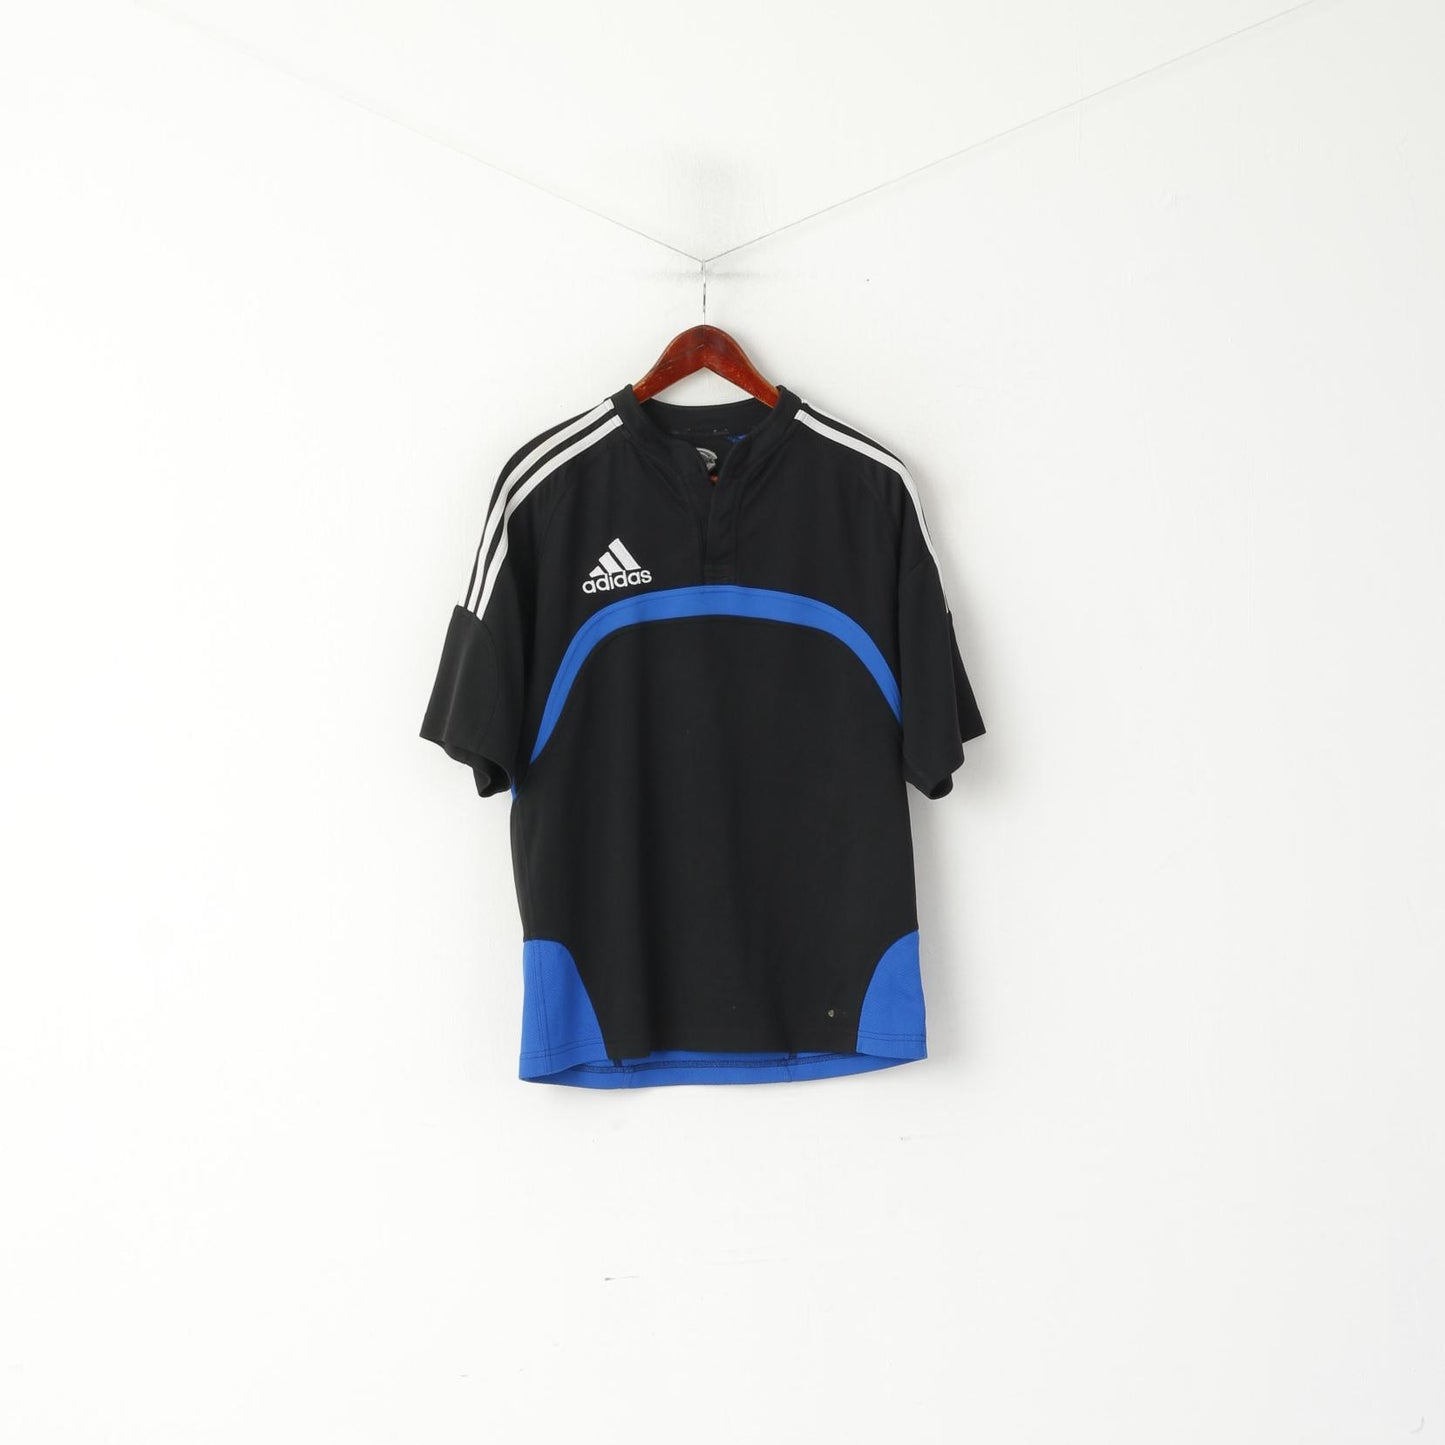 Adidas Men M Shirt Black Vintage Sportswear 3 Stripe Buttoned Neck Short Sleeve Top